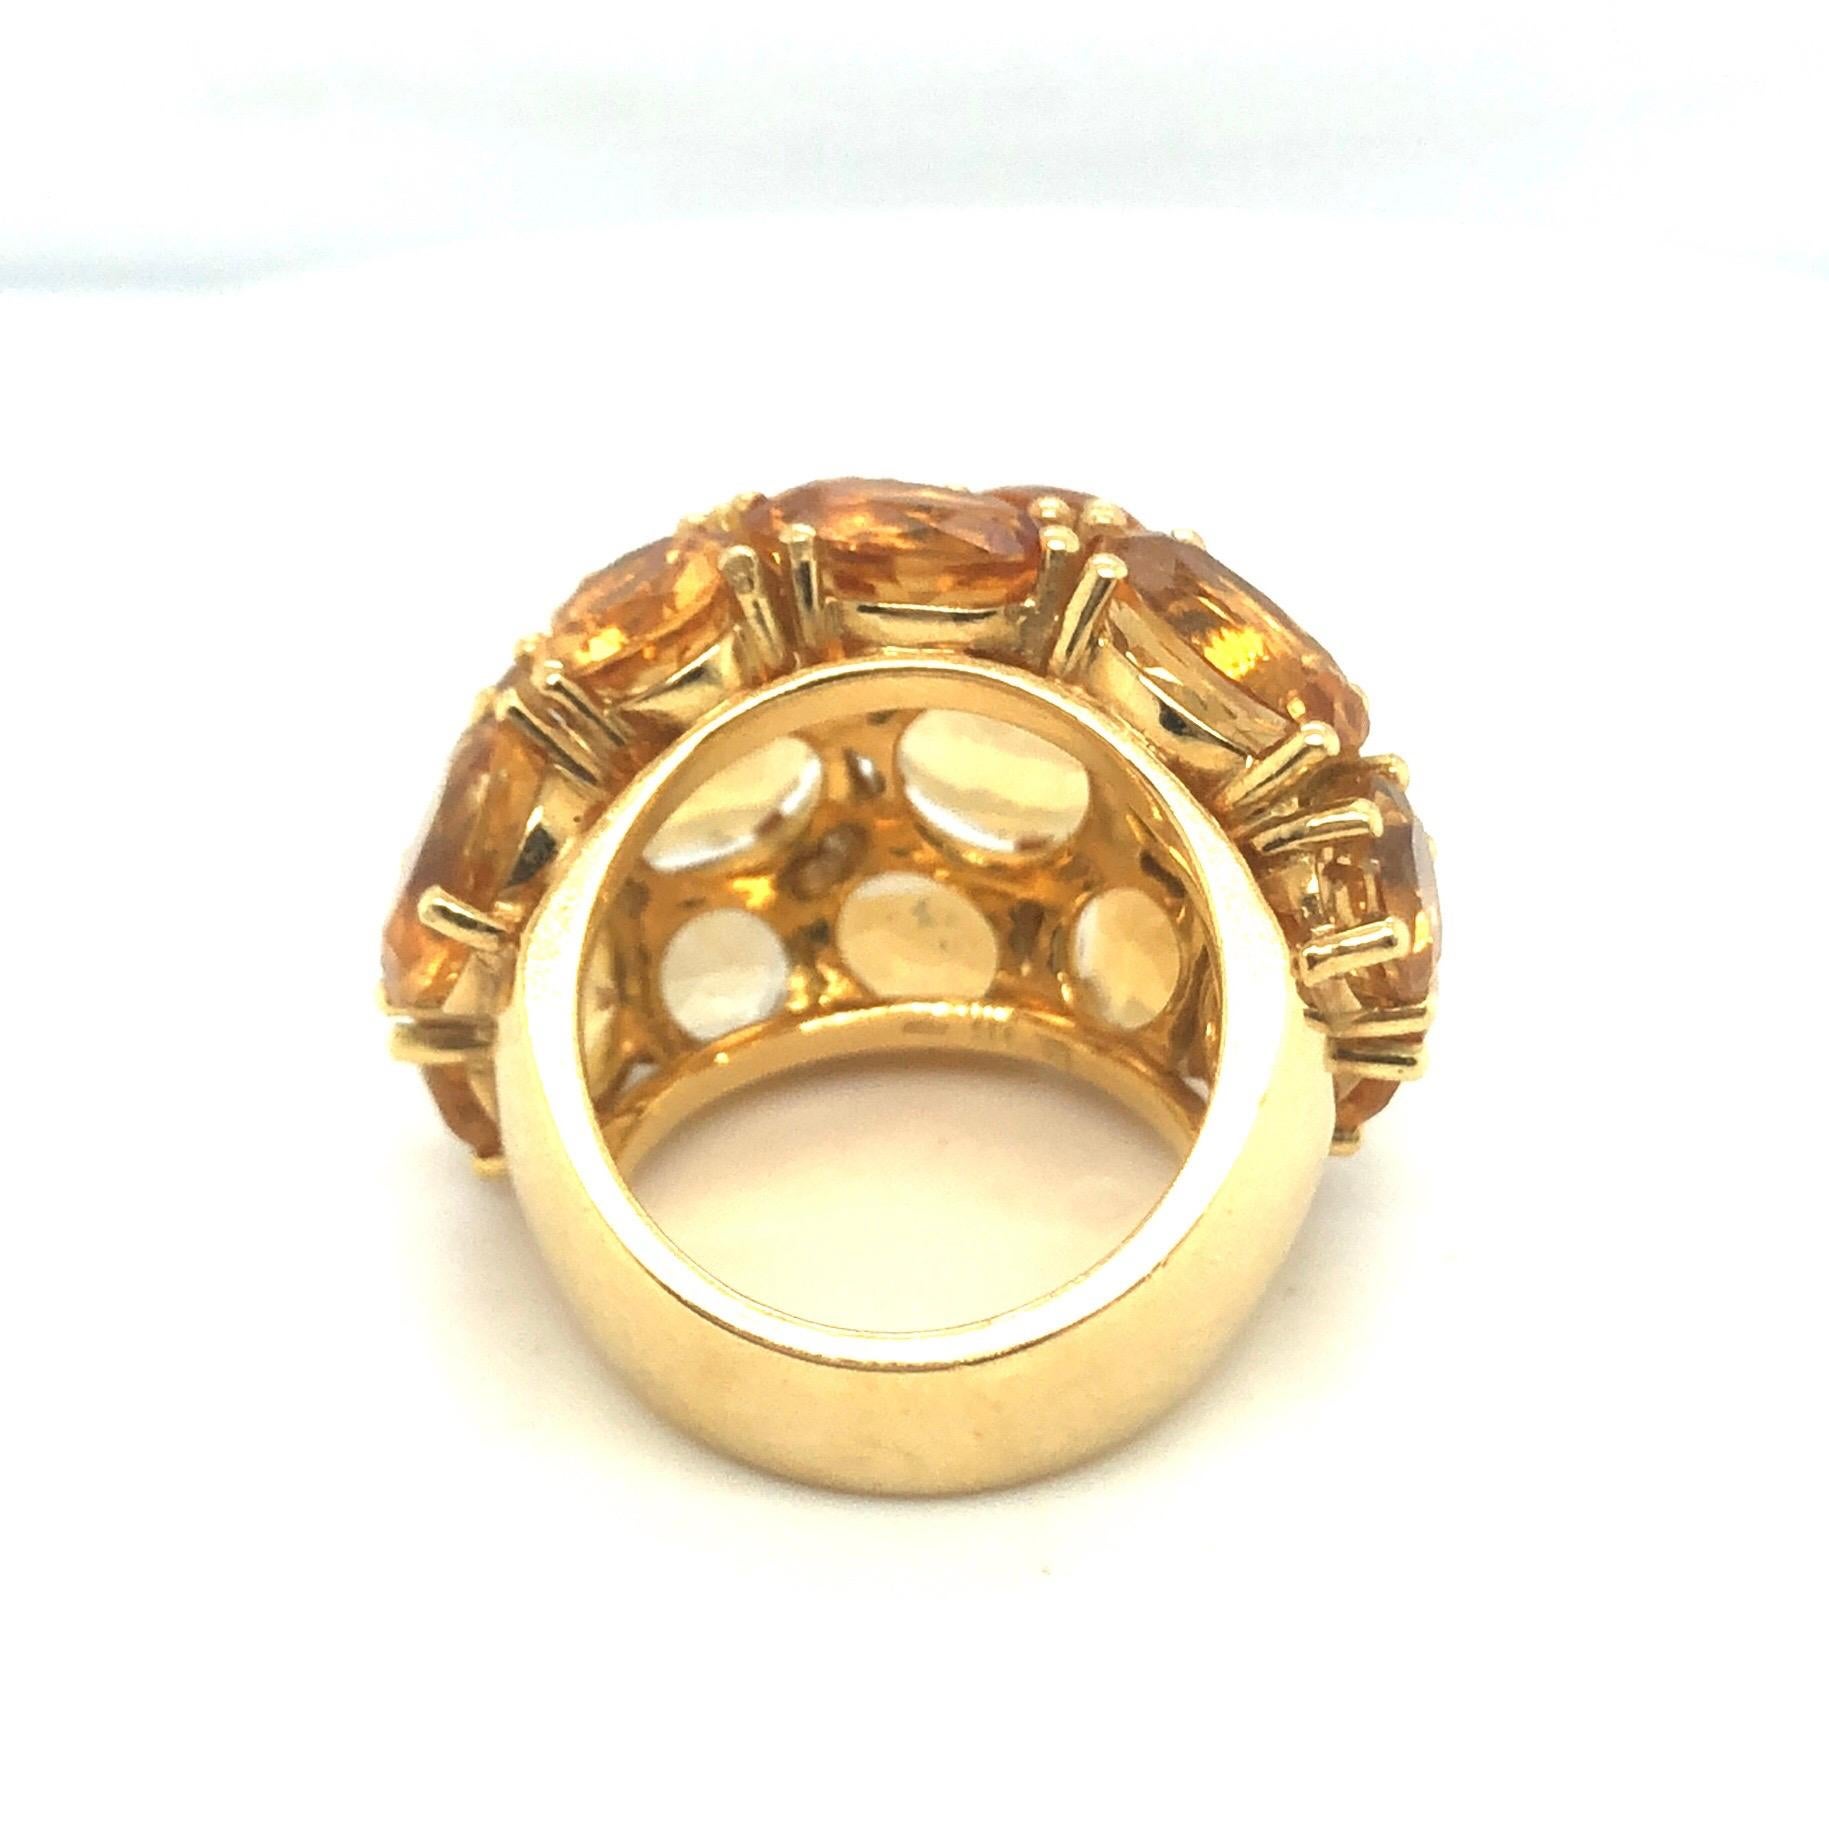 2000 gold ring